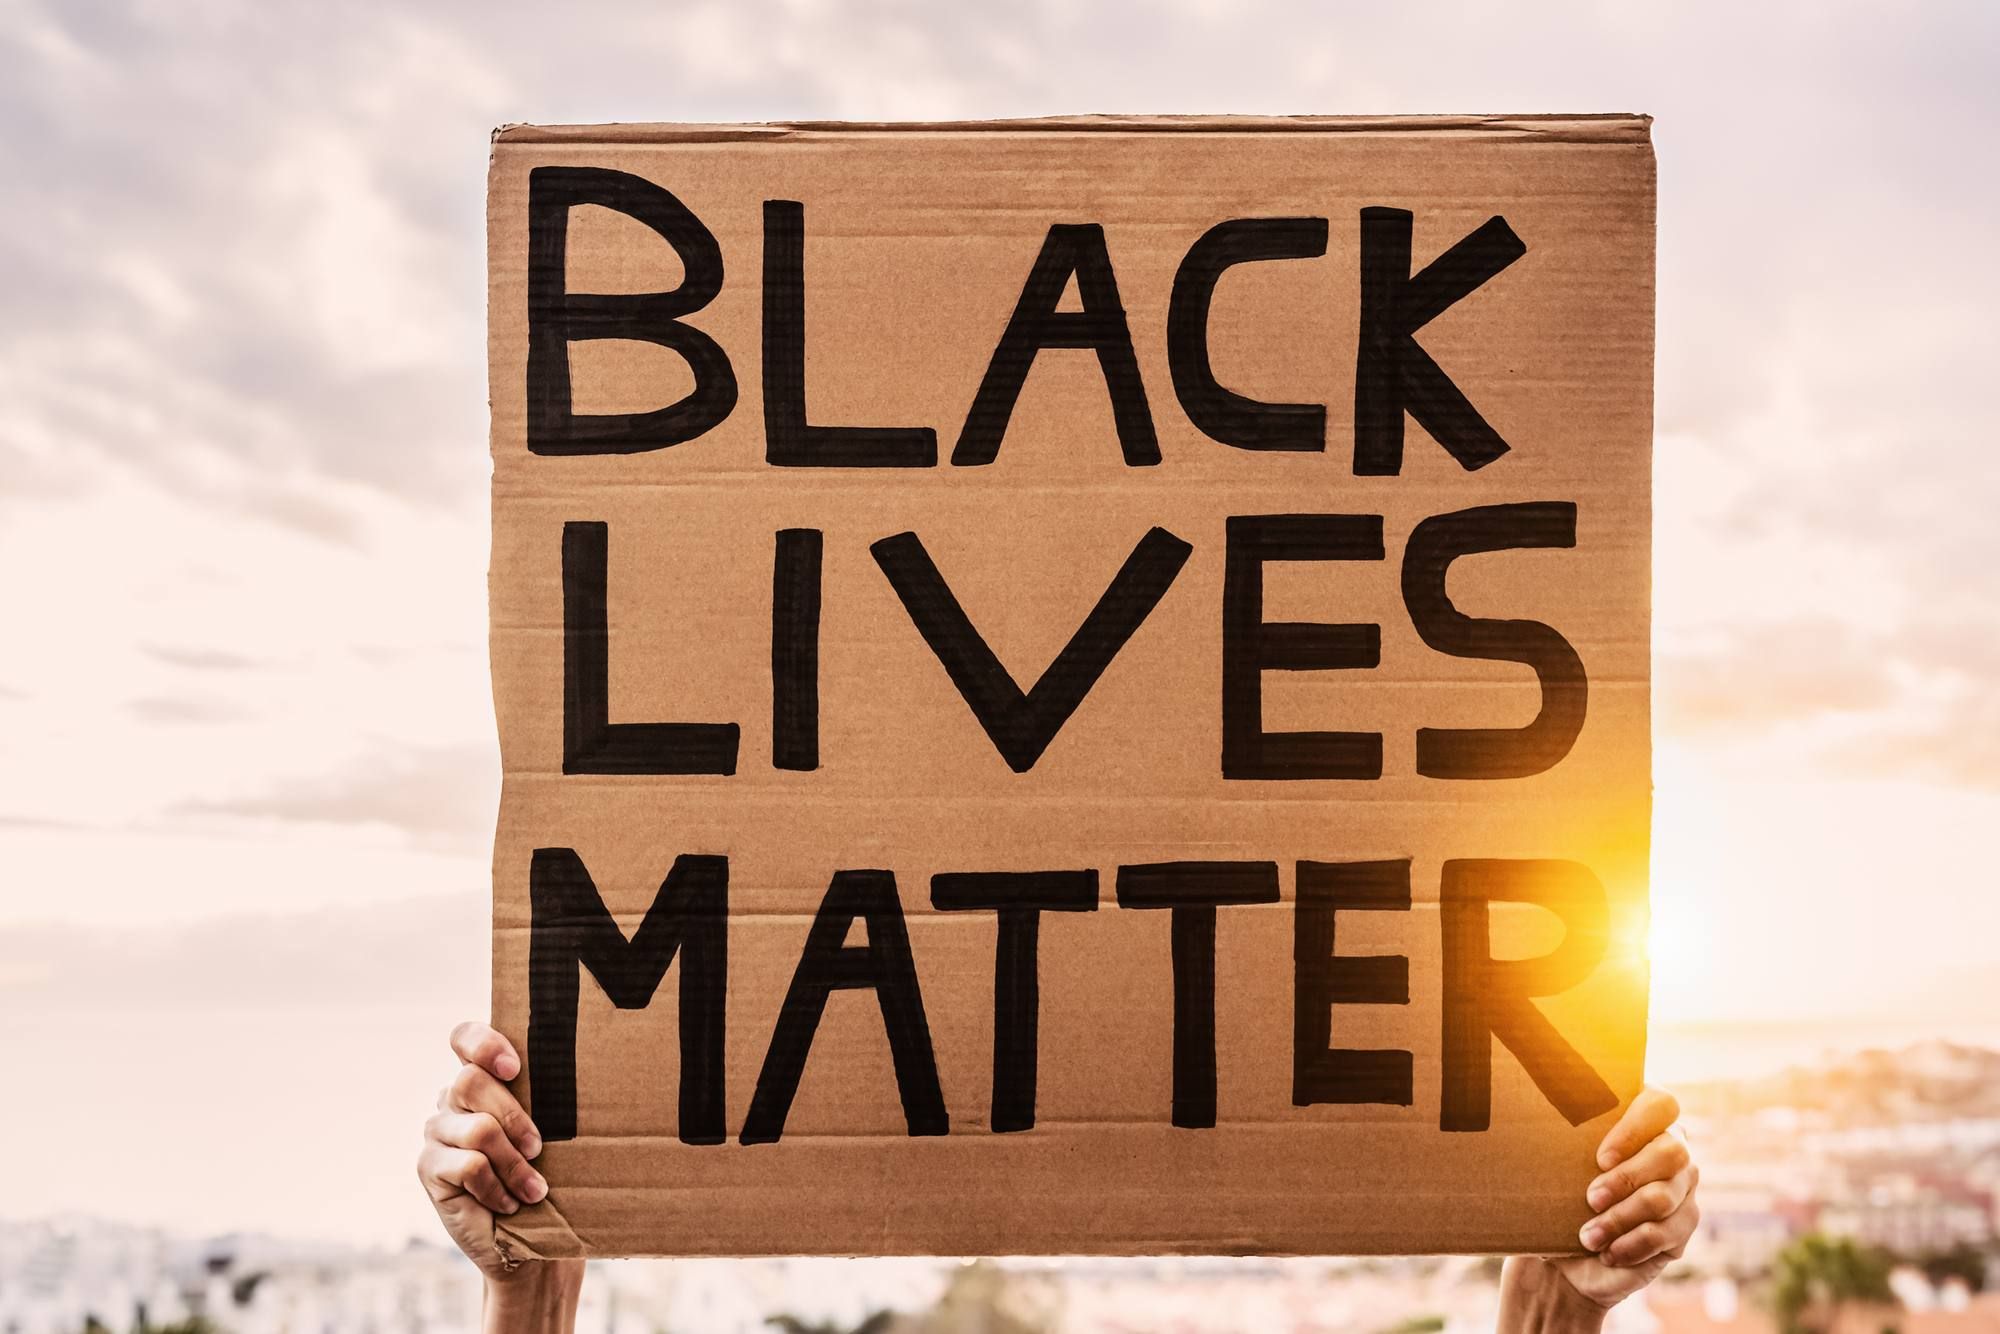 Black Lives Matter banner at church was vandalized.